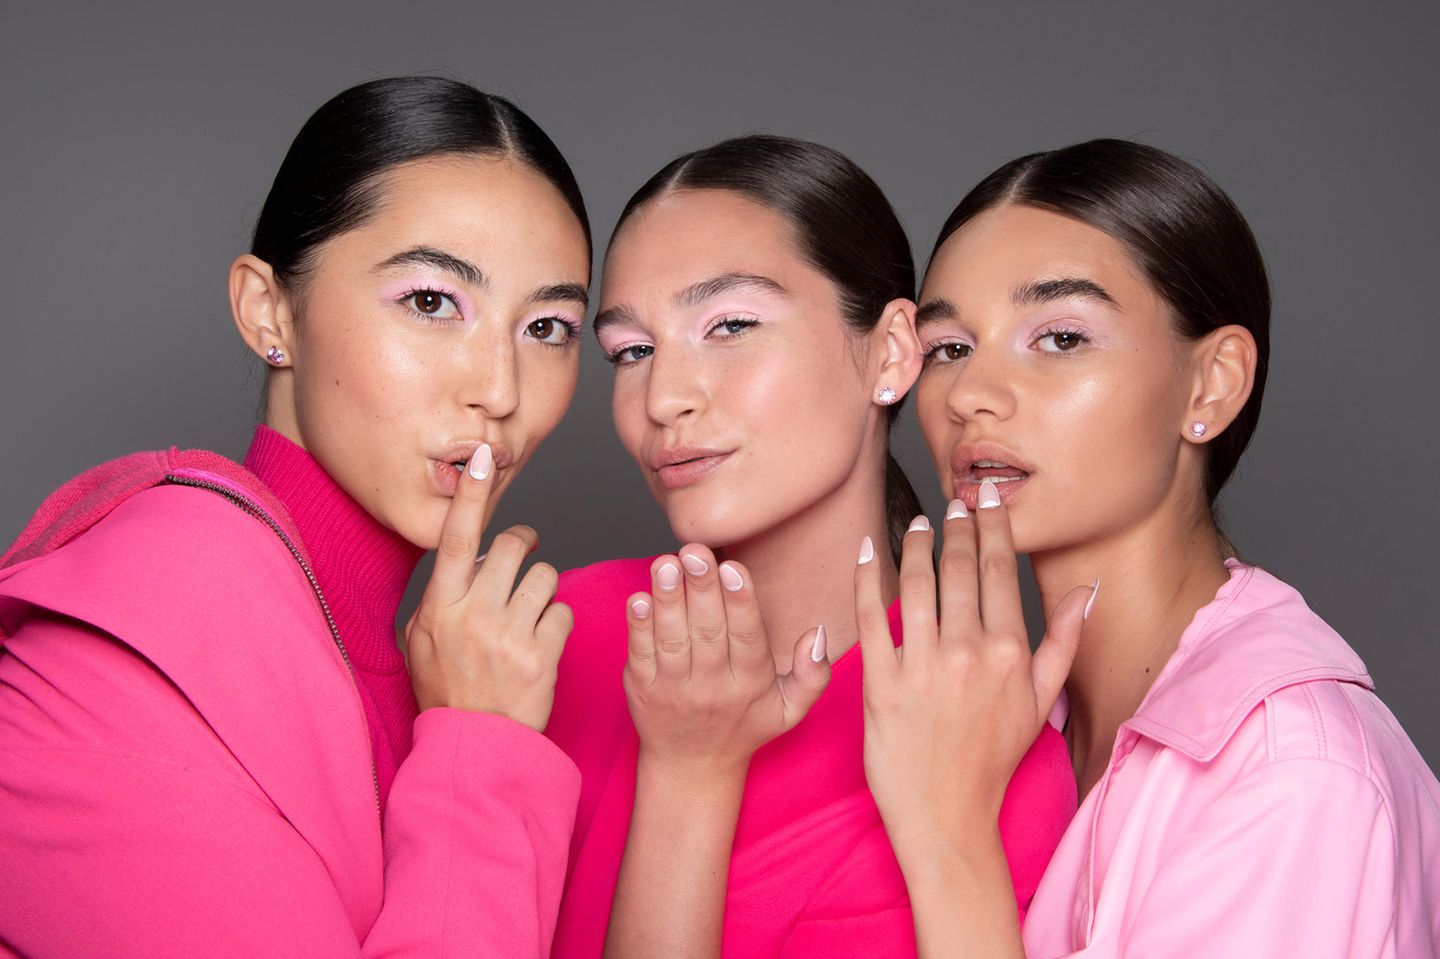 Lippenstift-Trends 2020: Models Backstage in Pink